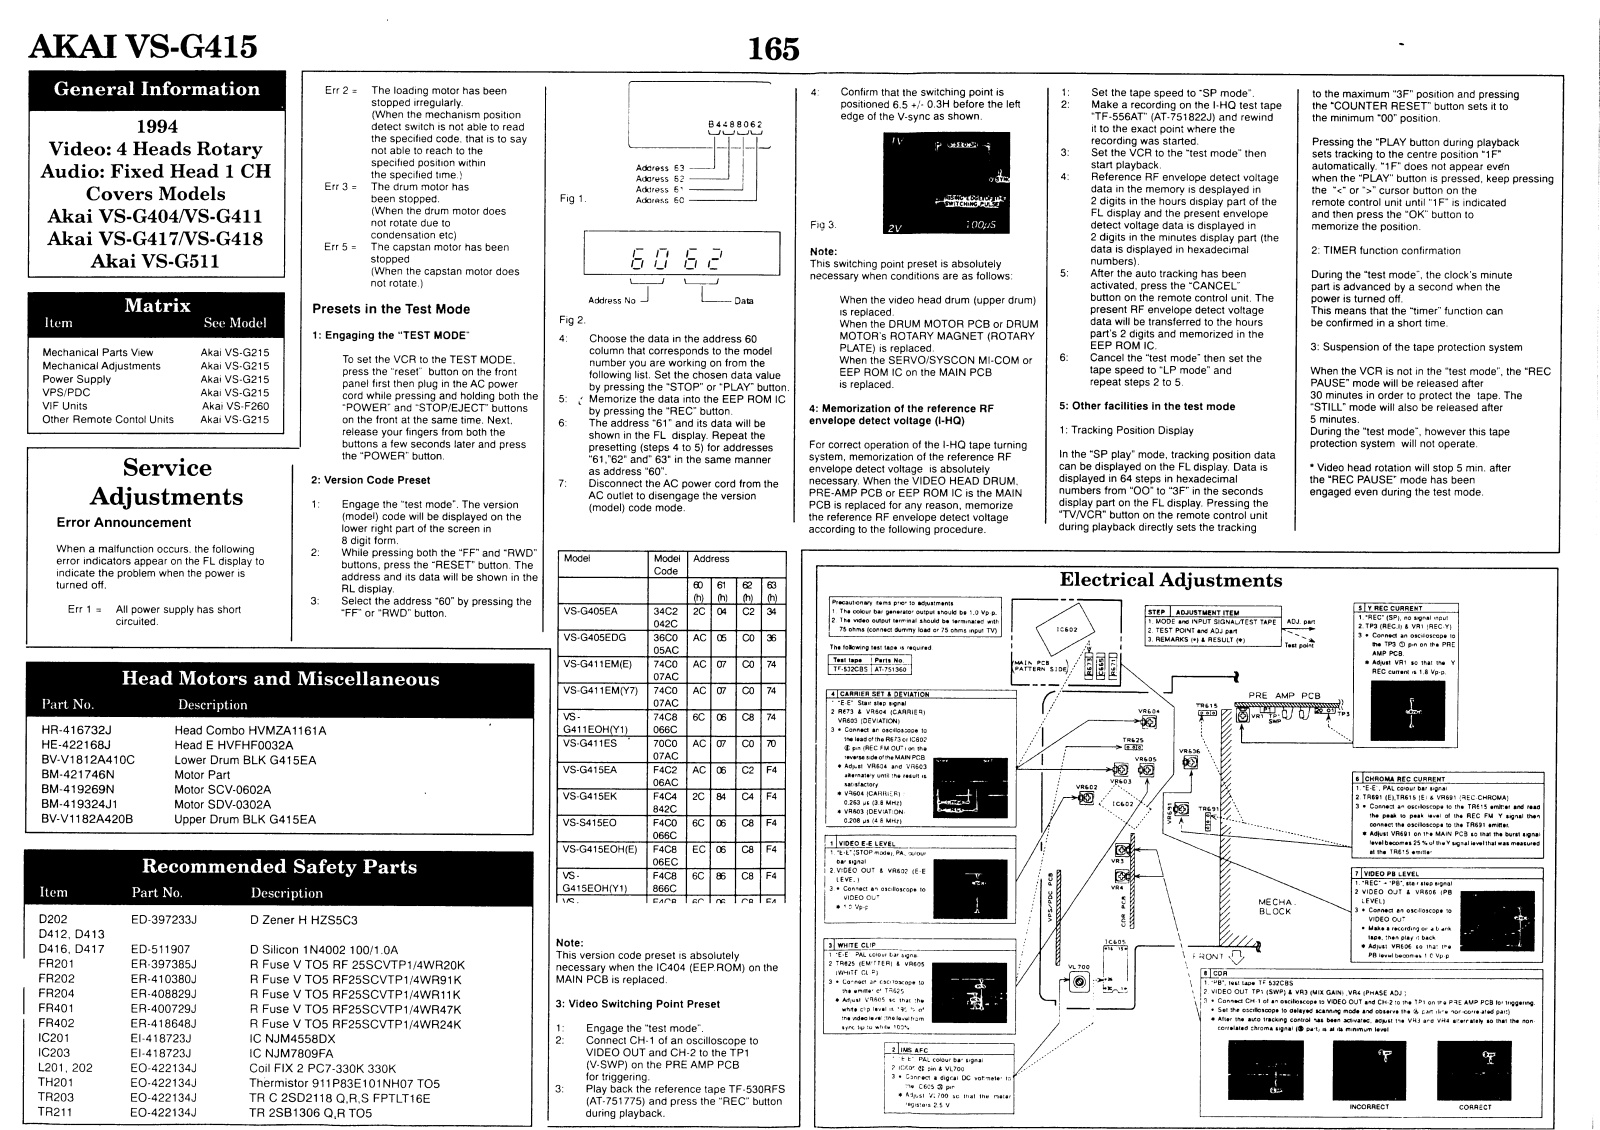 AKAI VS-G415 Service Manual